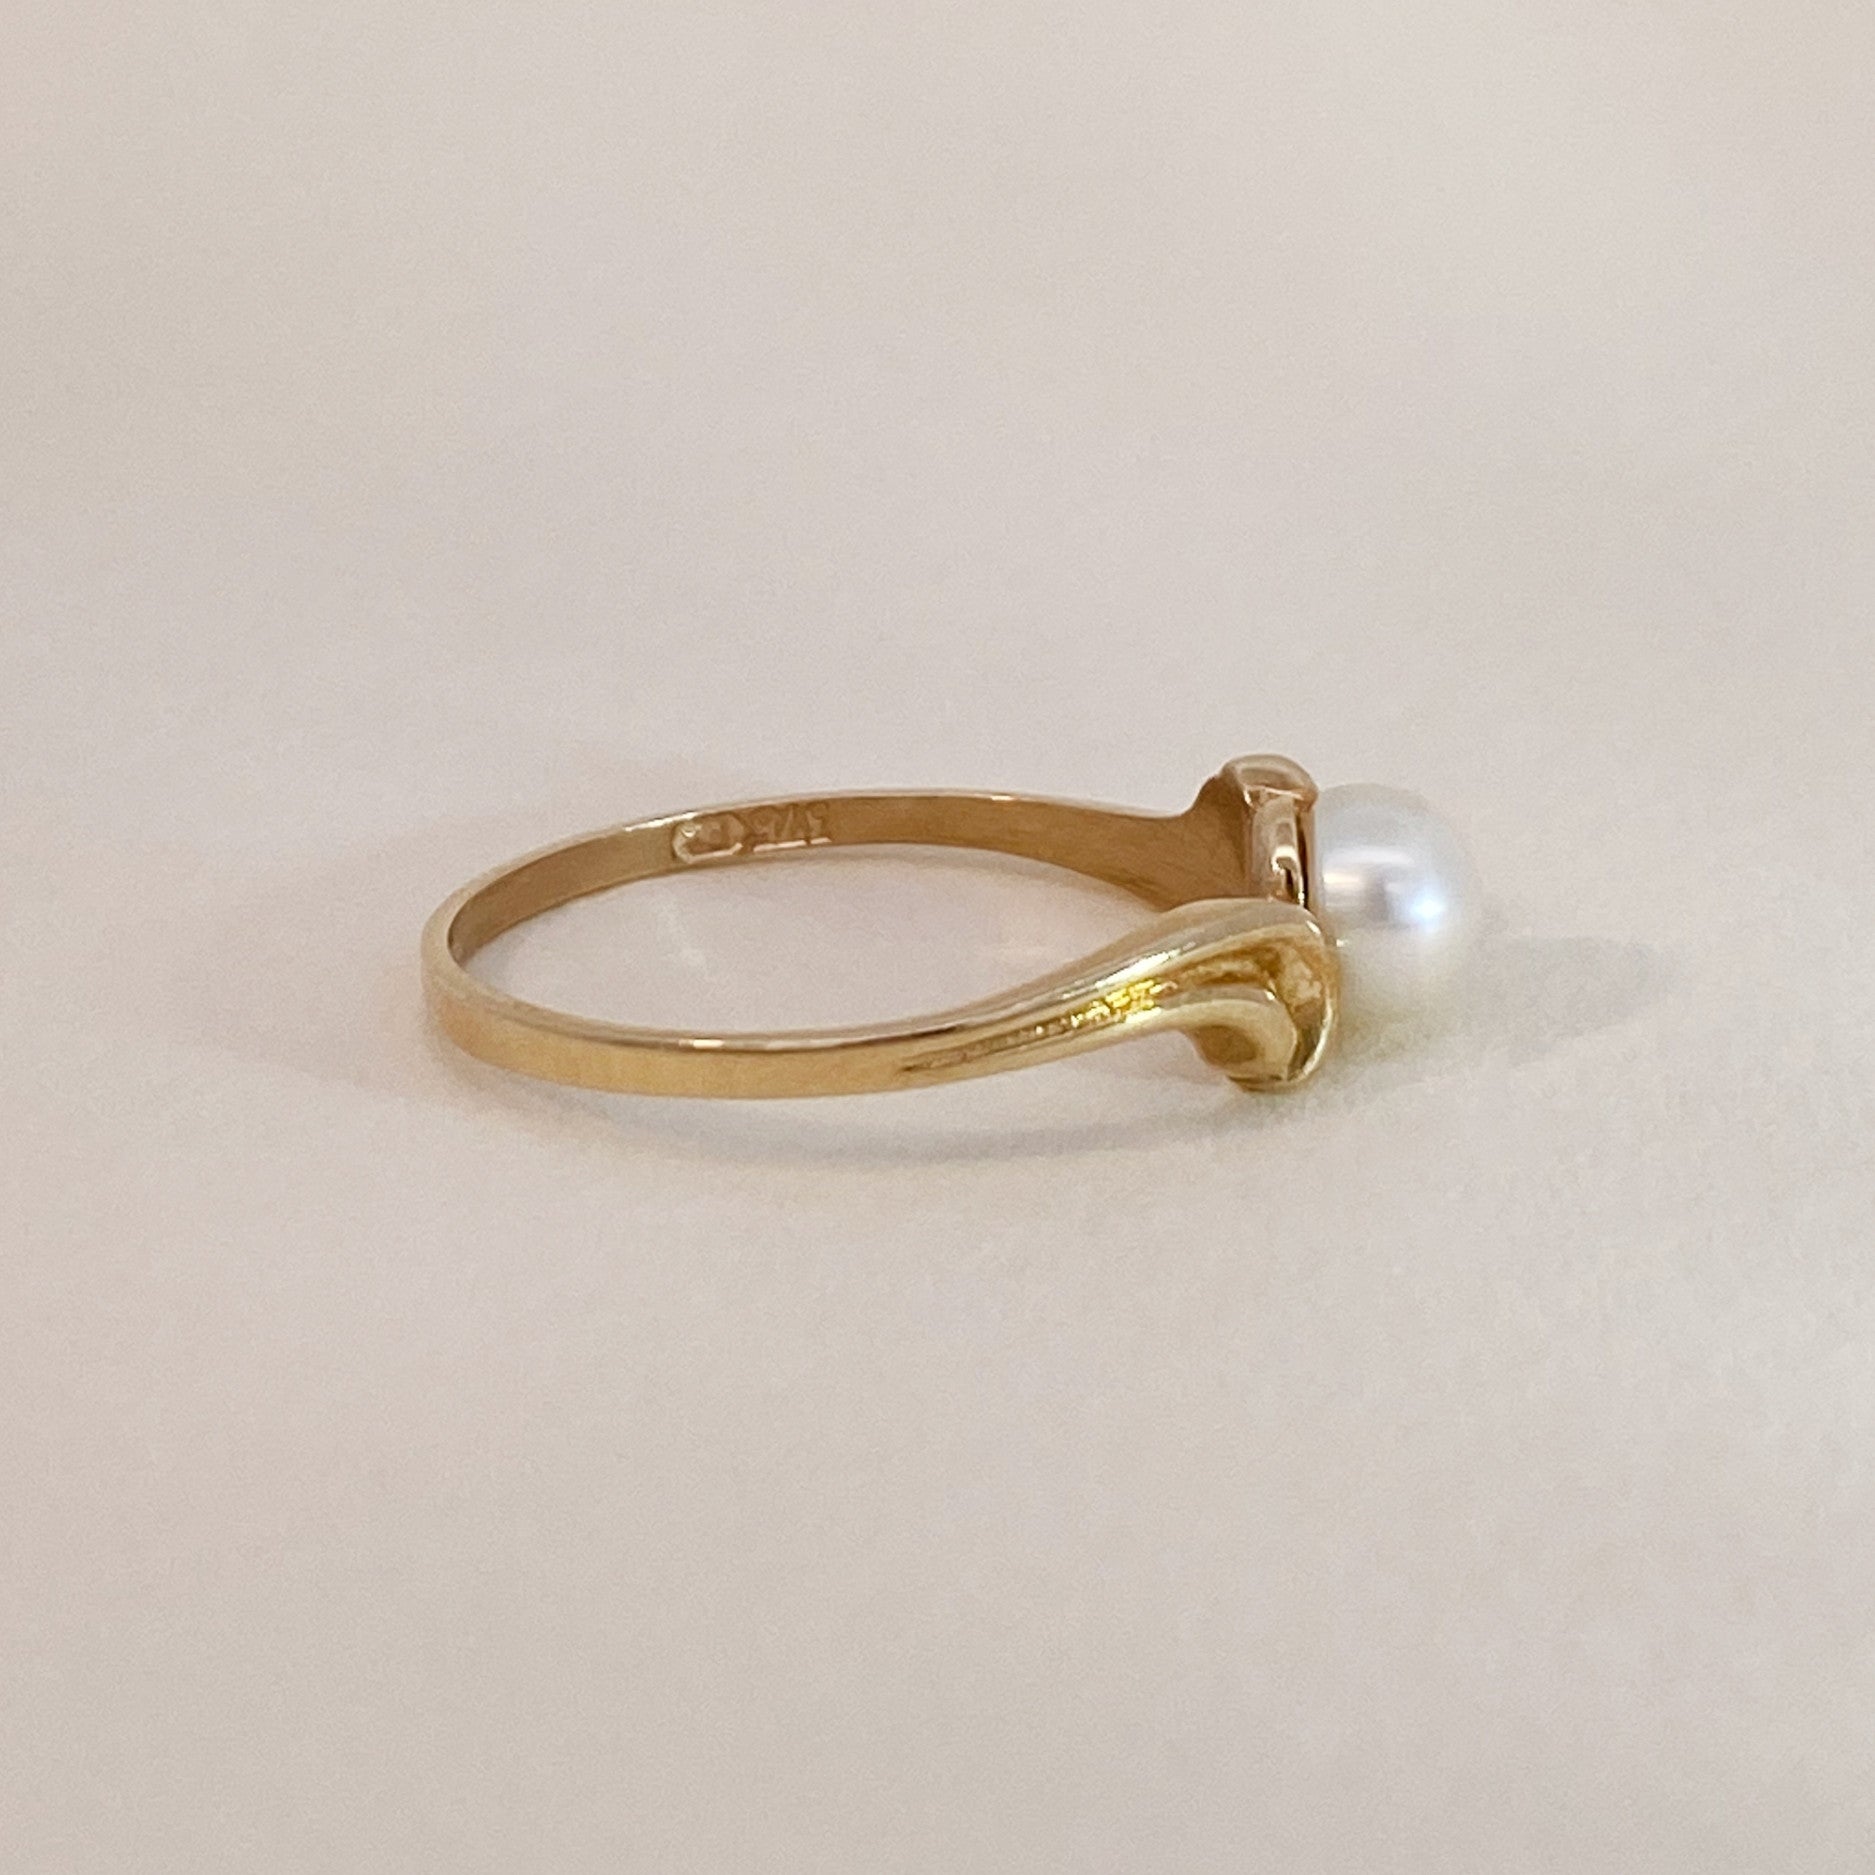 Vintage parel ring